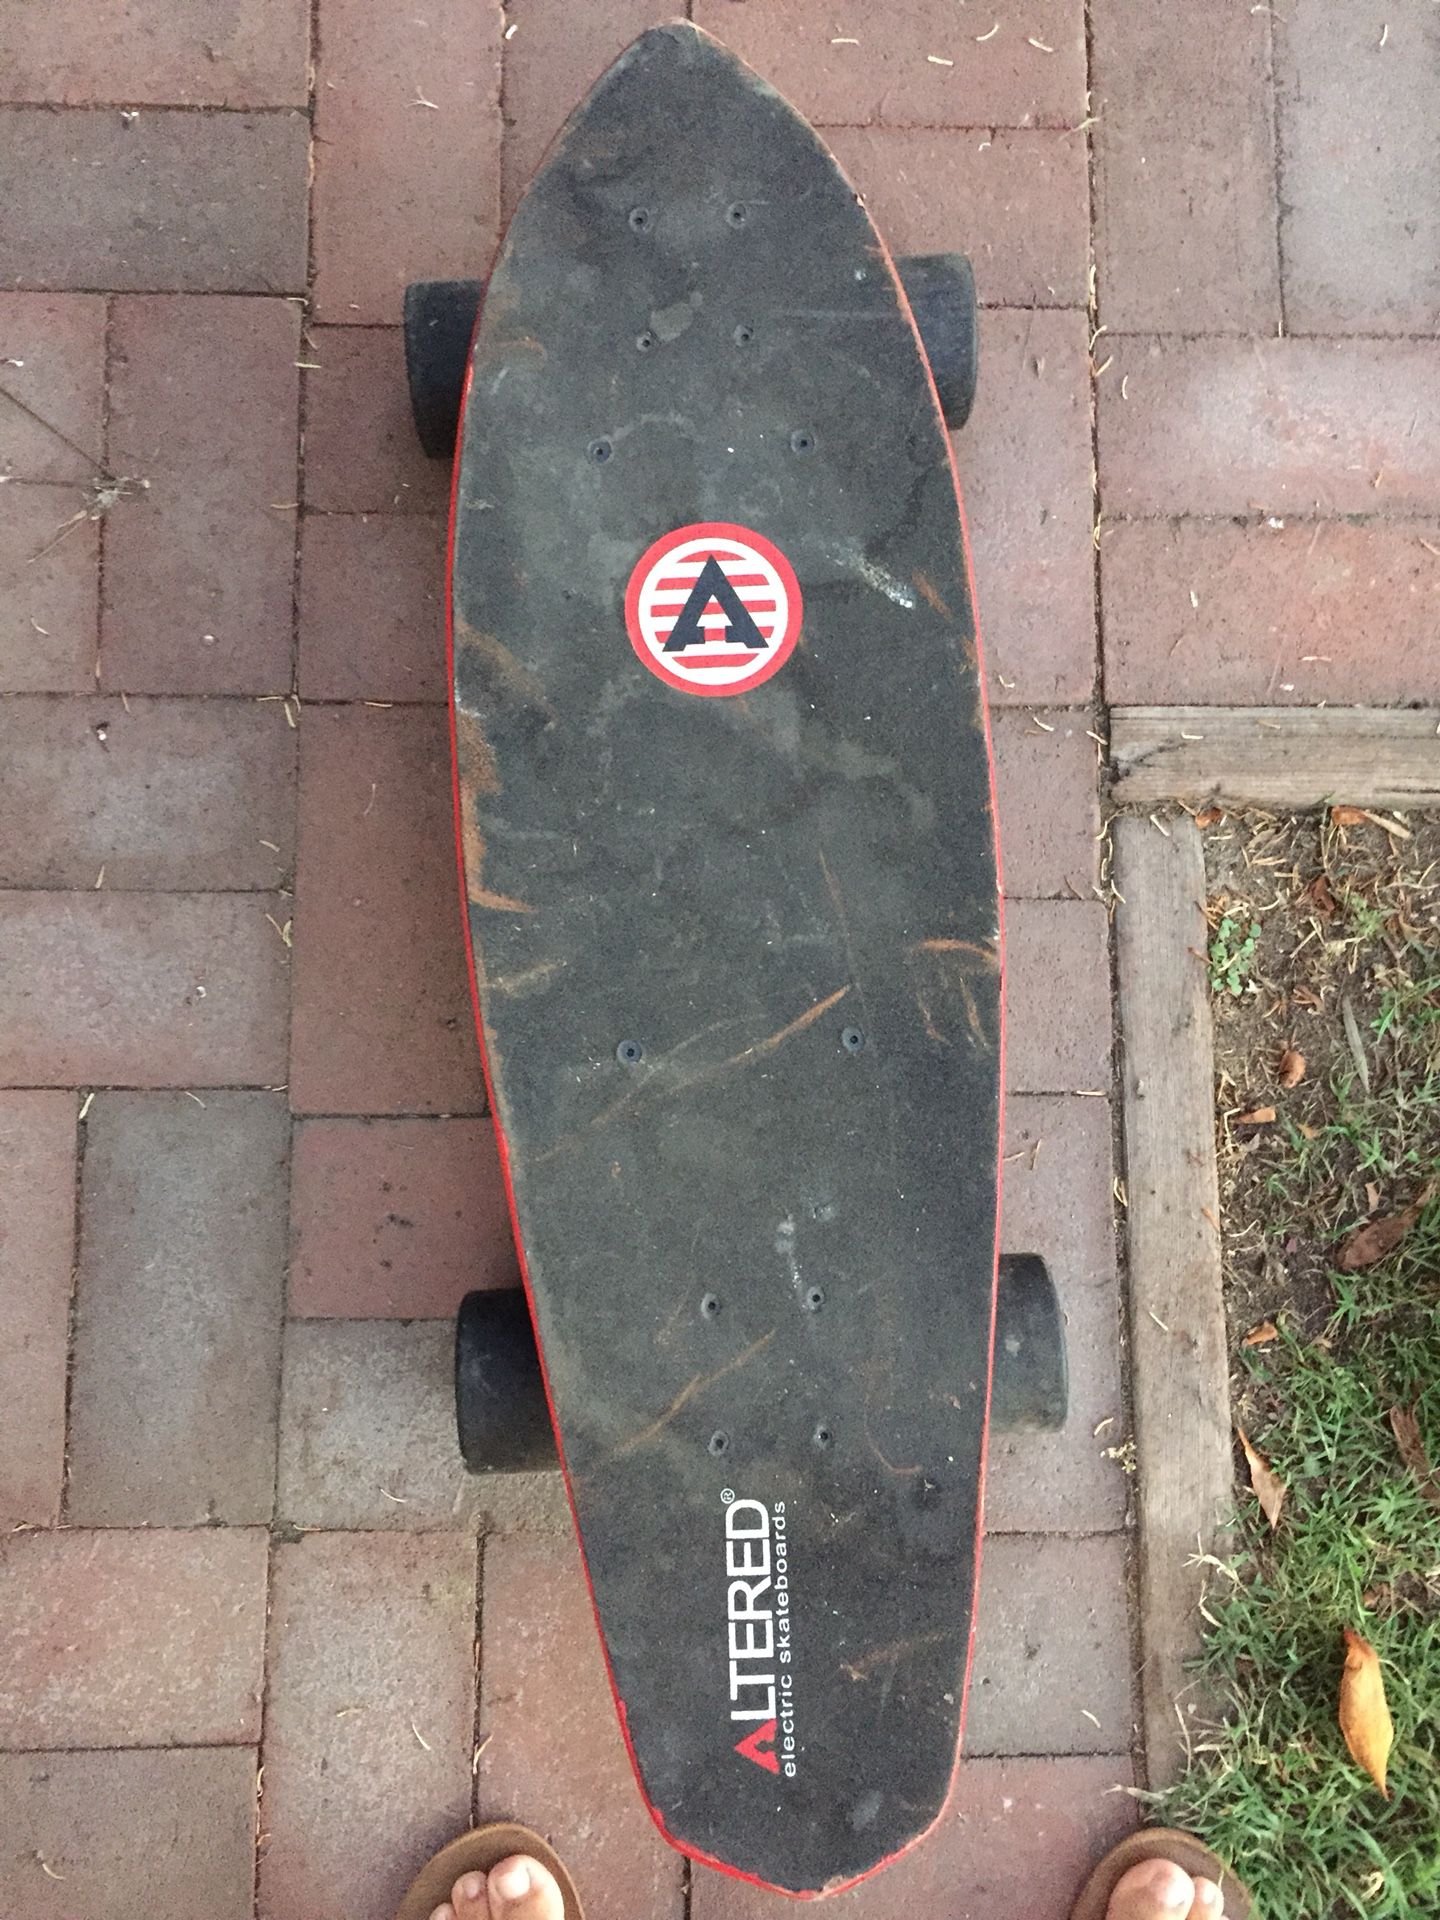 Altered electric skateboard